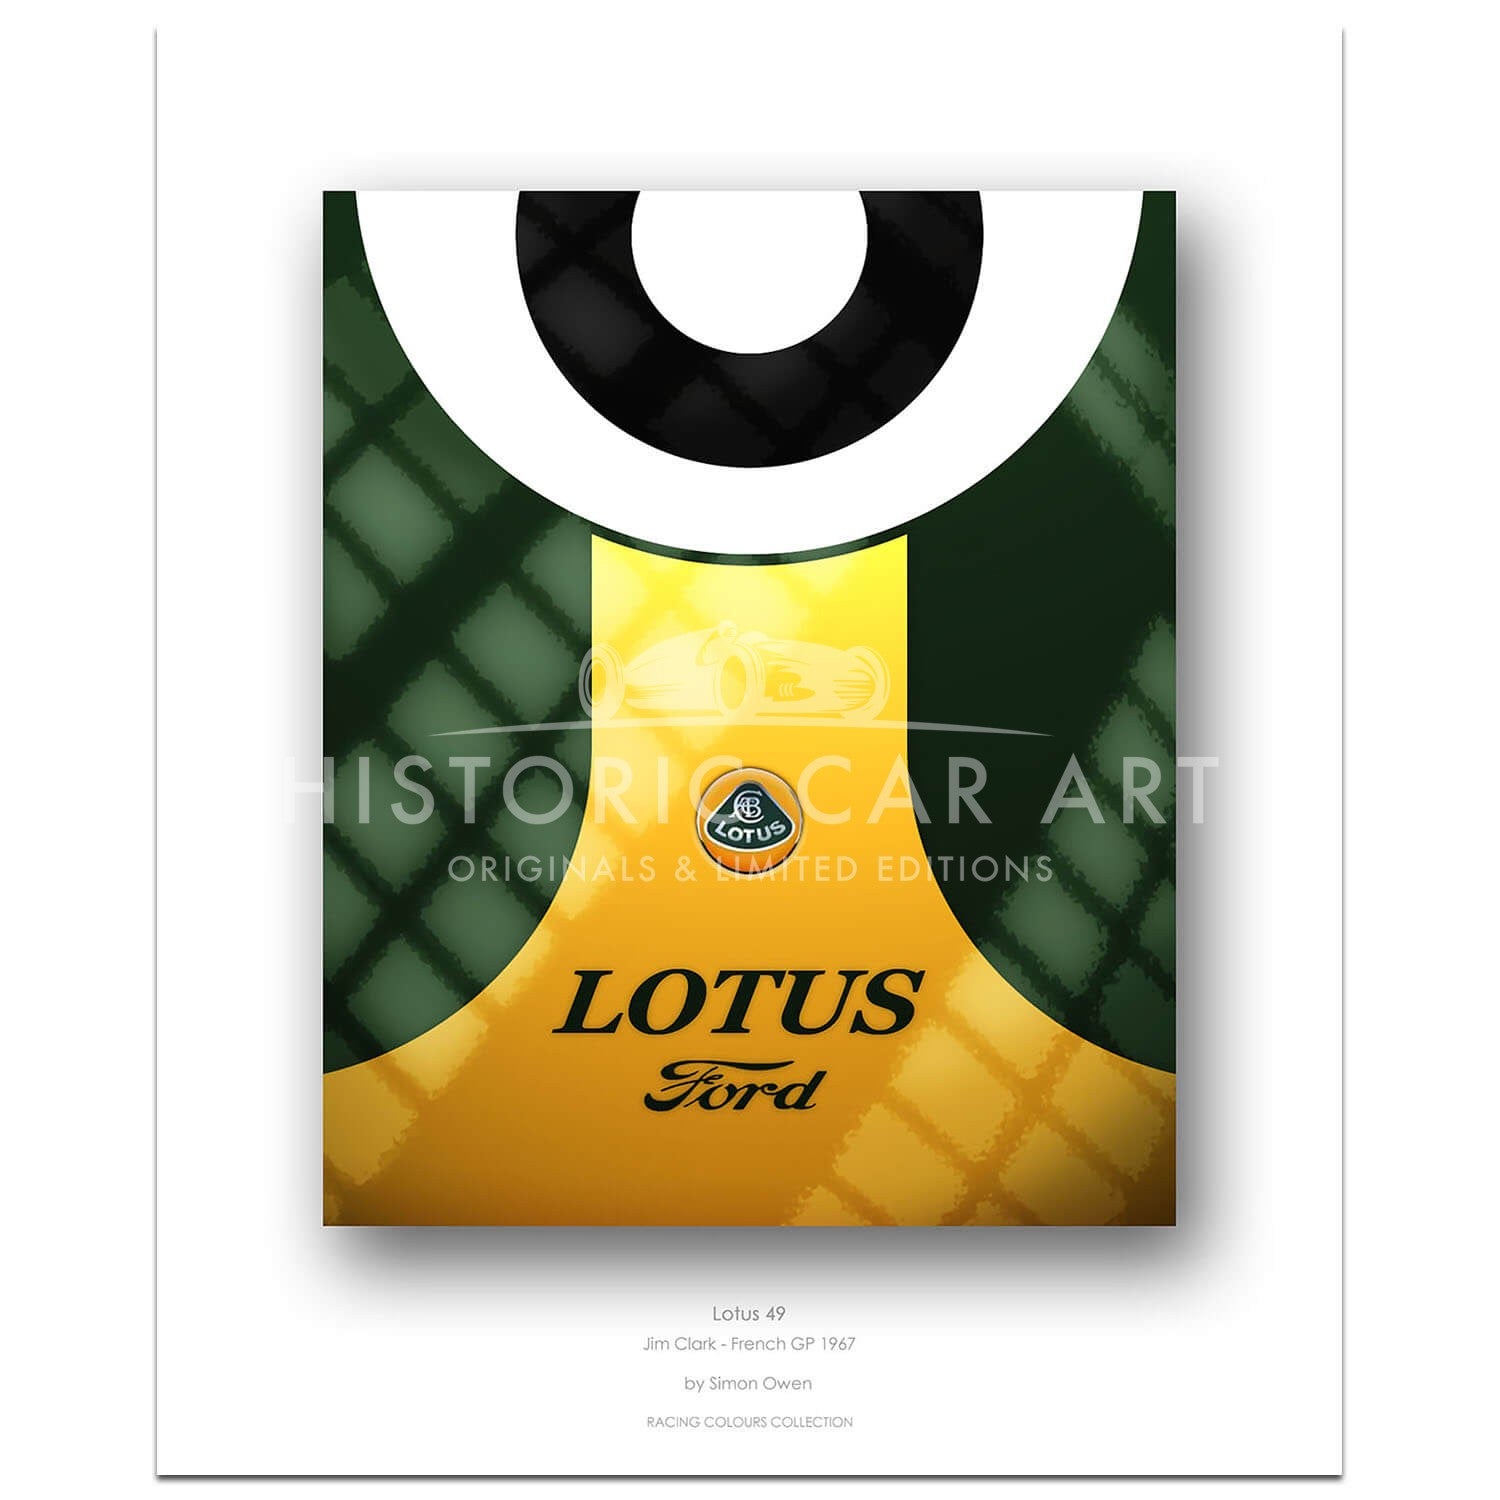 1967 Lotus 49 (Jim Clark / French GP) - Print